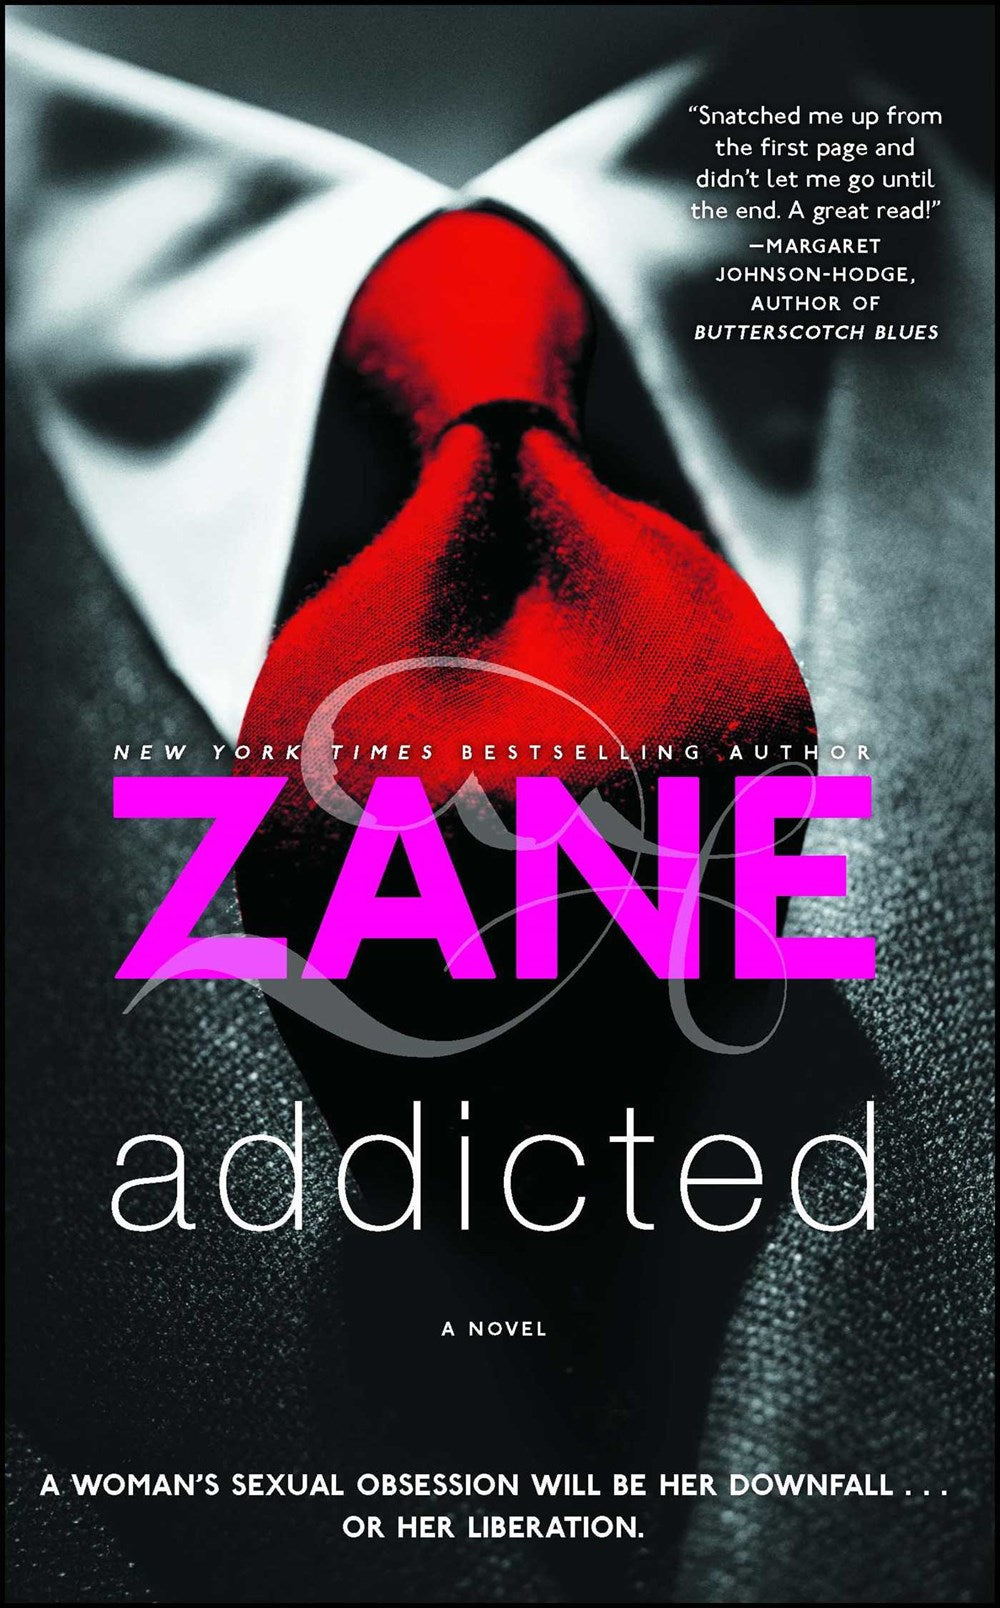 Addicted: A Novel